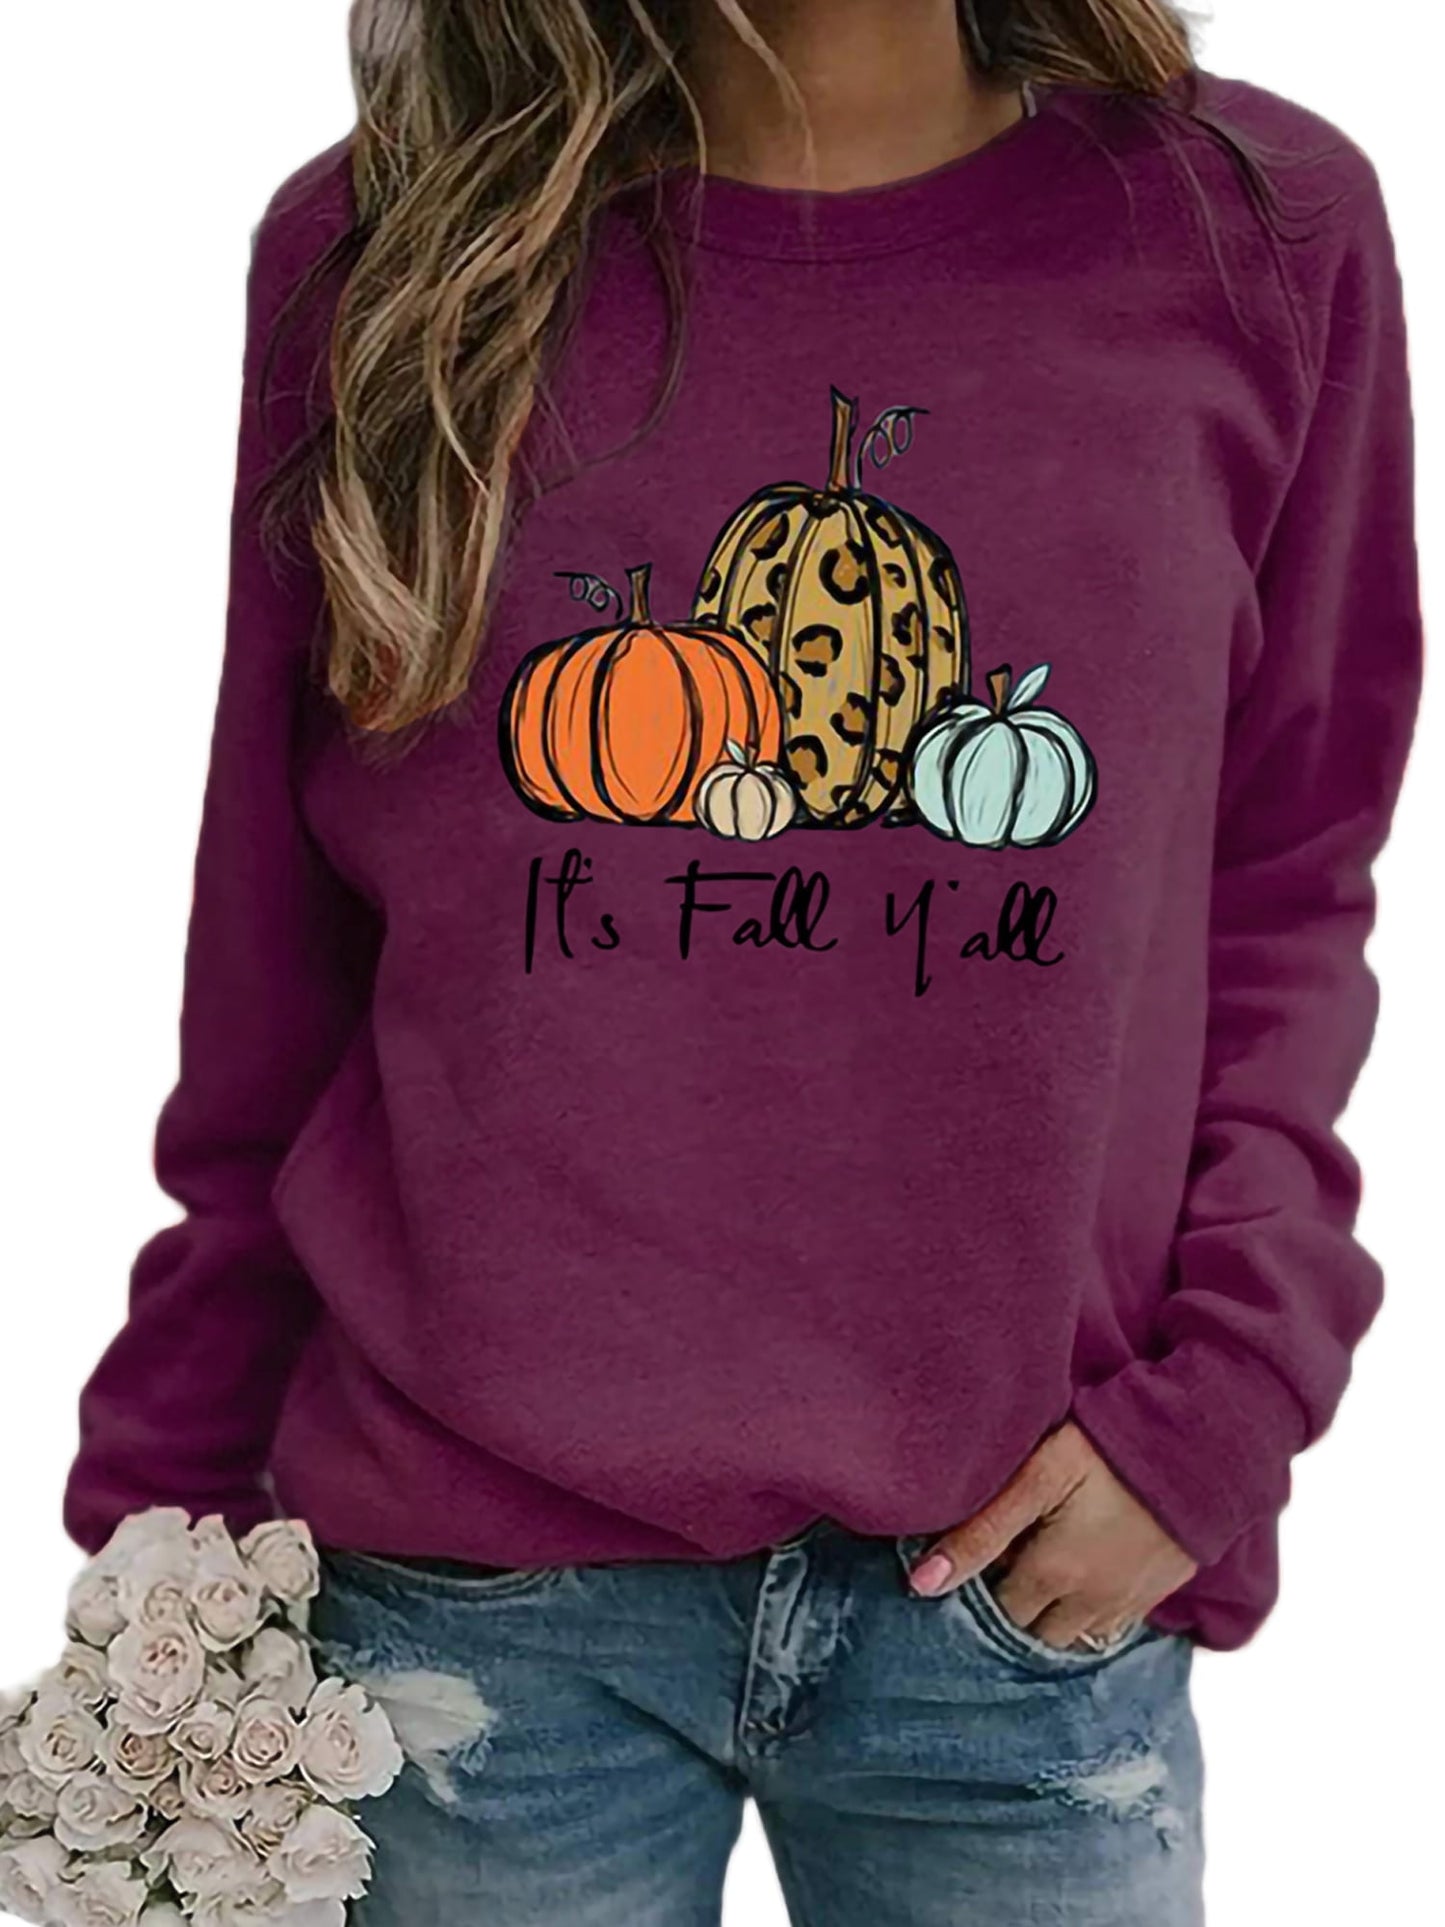 It's Fall Ya'll Lightweight Pullover Shirt